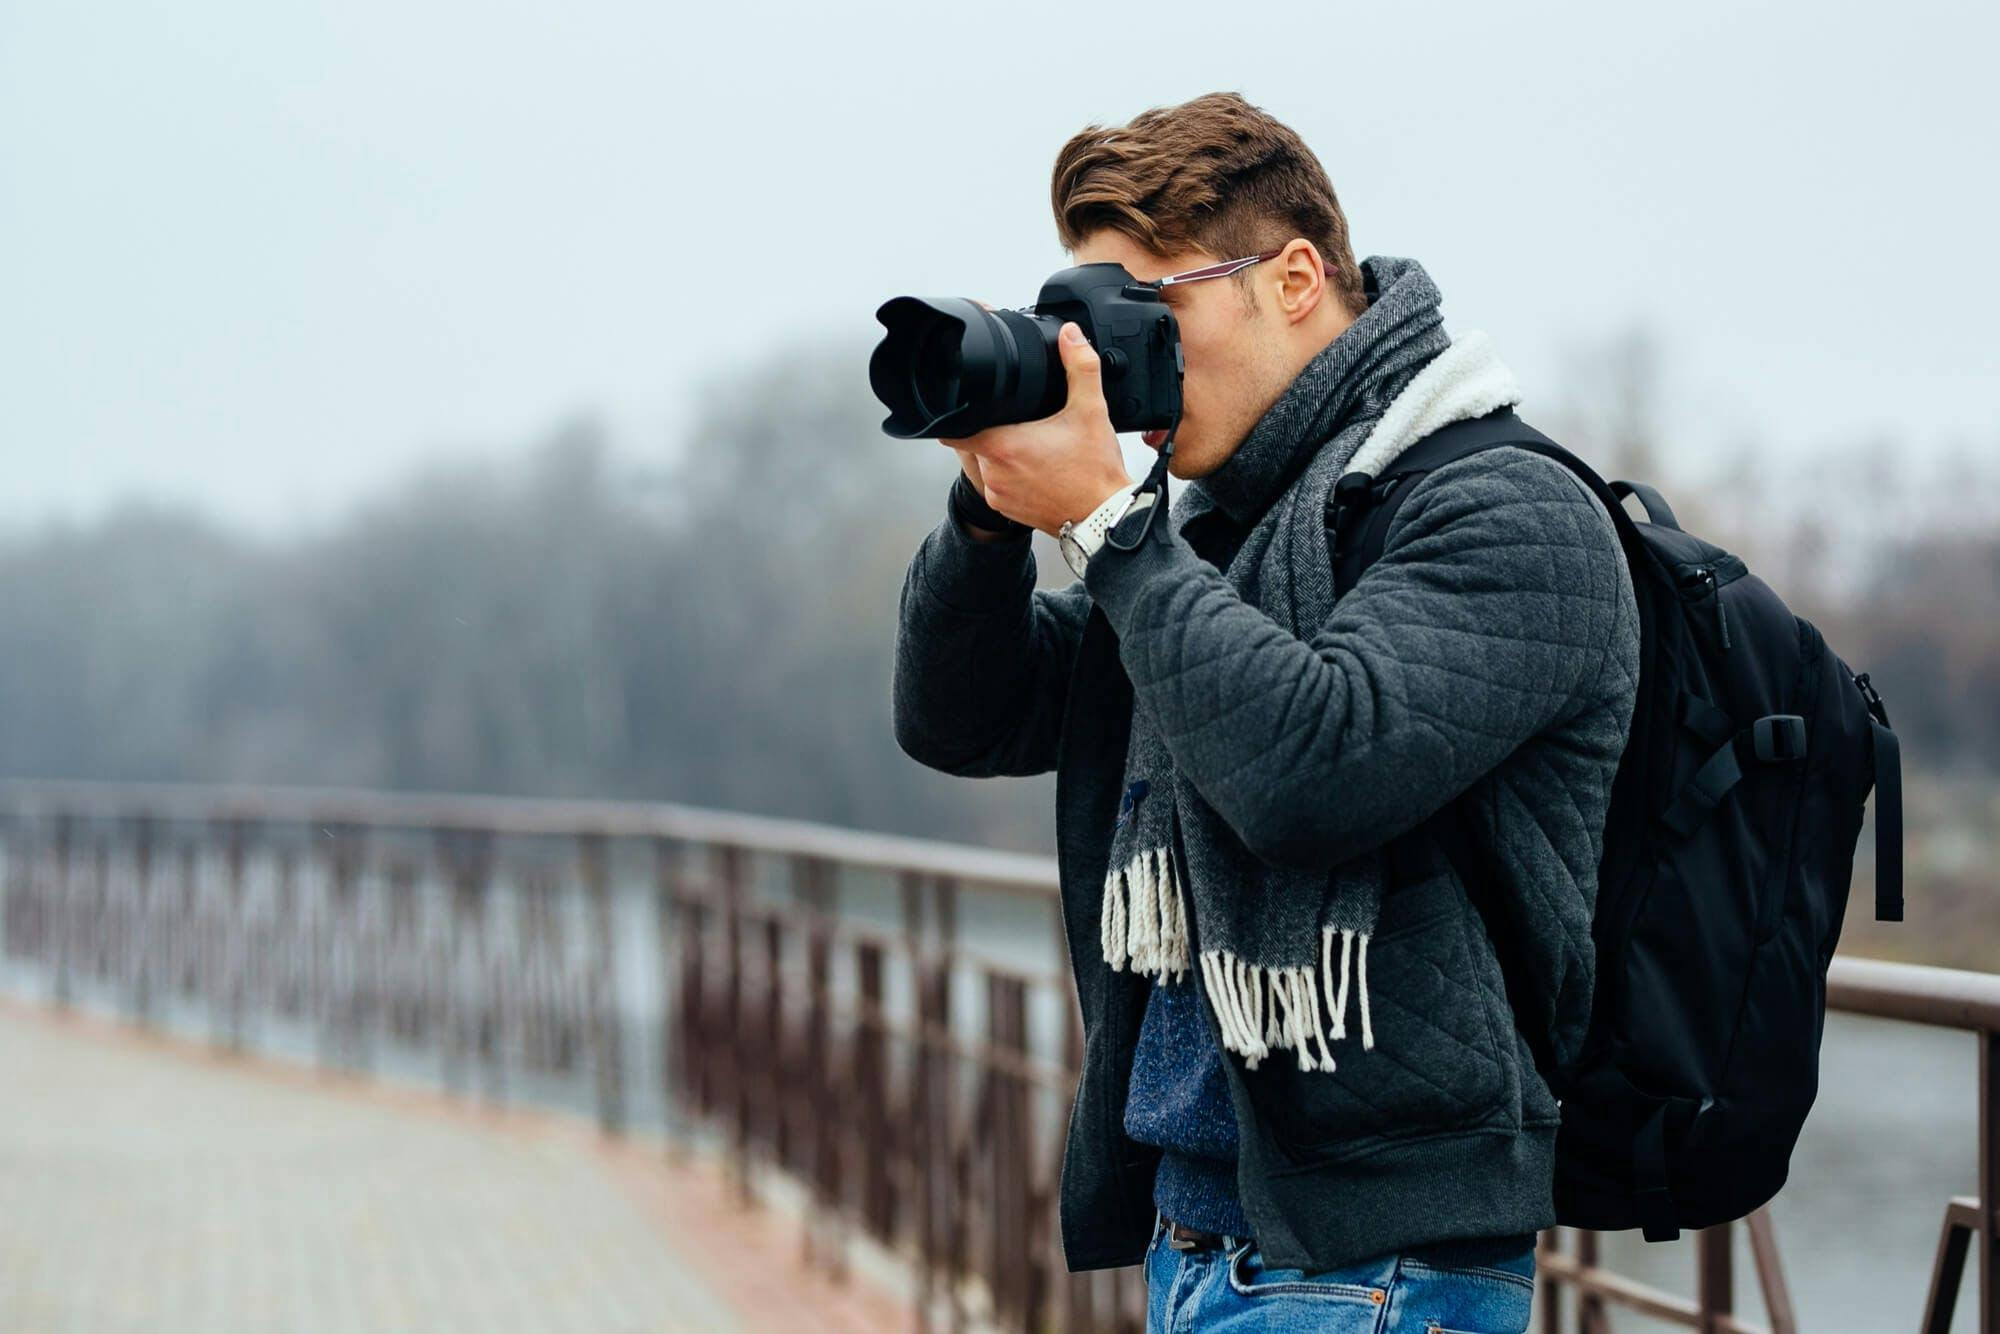 How Do Freelance Photographers Make Money?